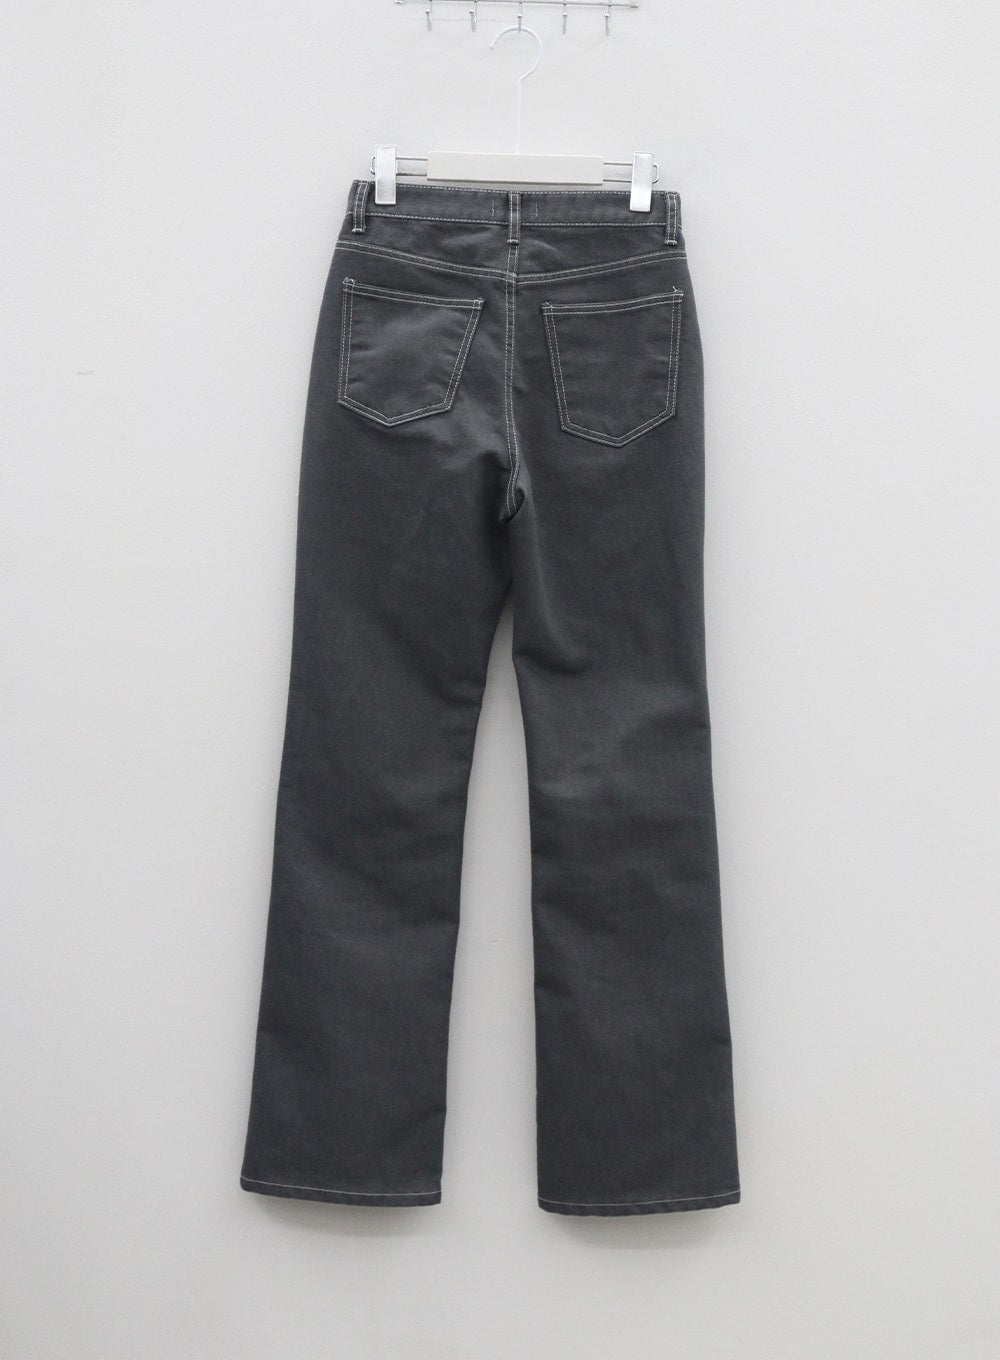 Stitch Detail Jeans BM317